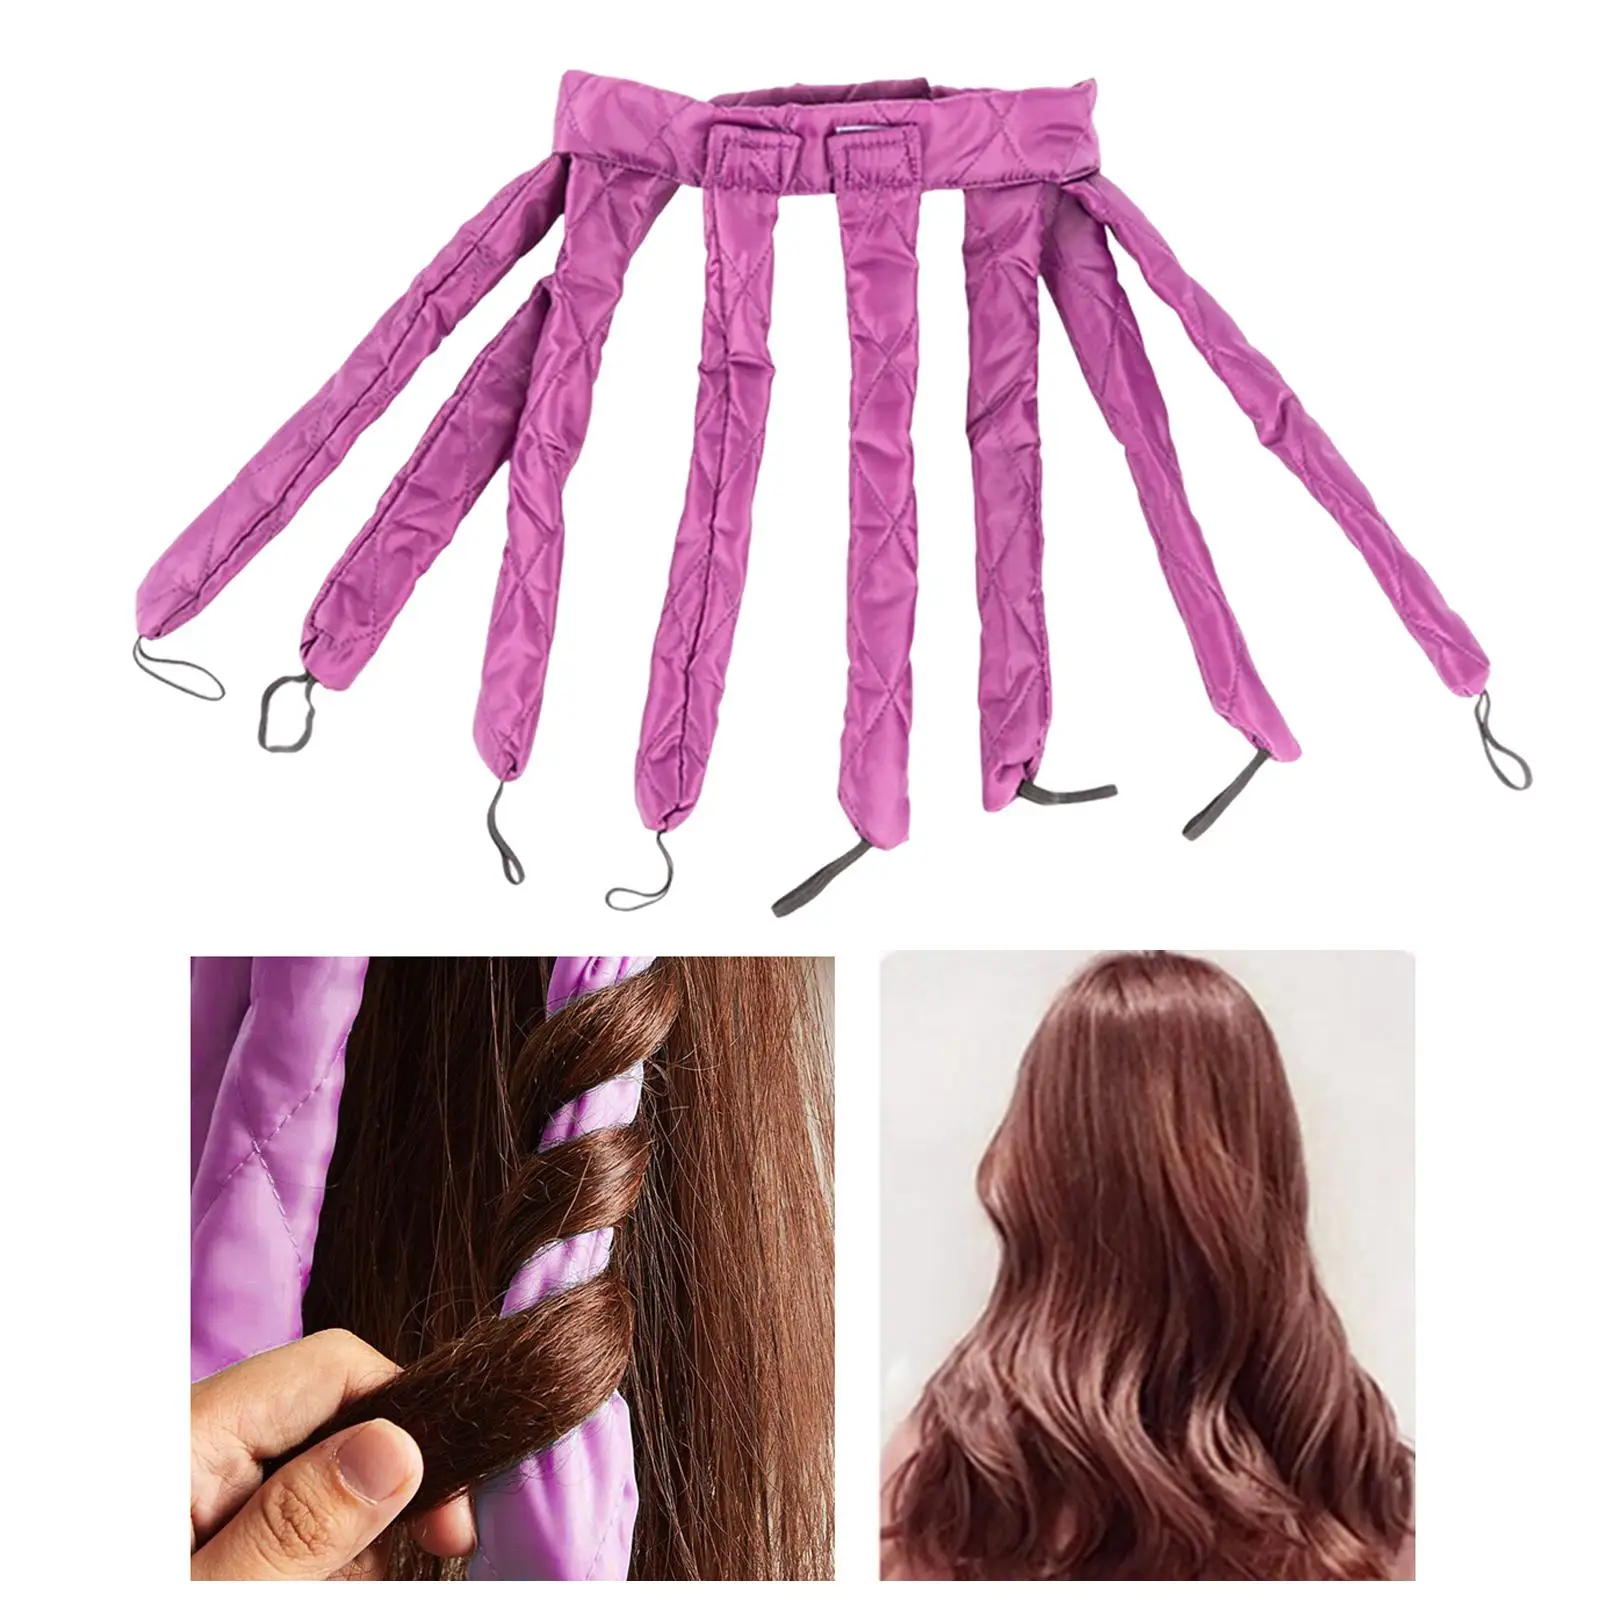 Octopus Design Heatless Hair Curler Hair Styling Tool Wave Hair Curler No Heat Curling Rod Curling Wand Women Girl Natural Curls